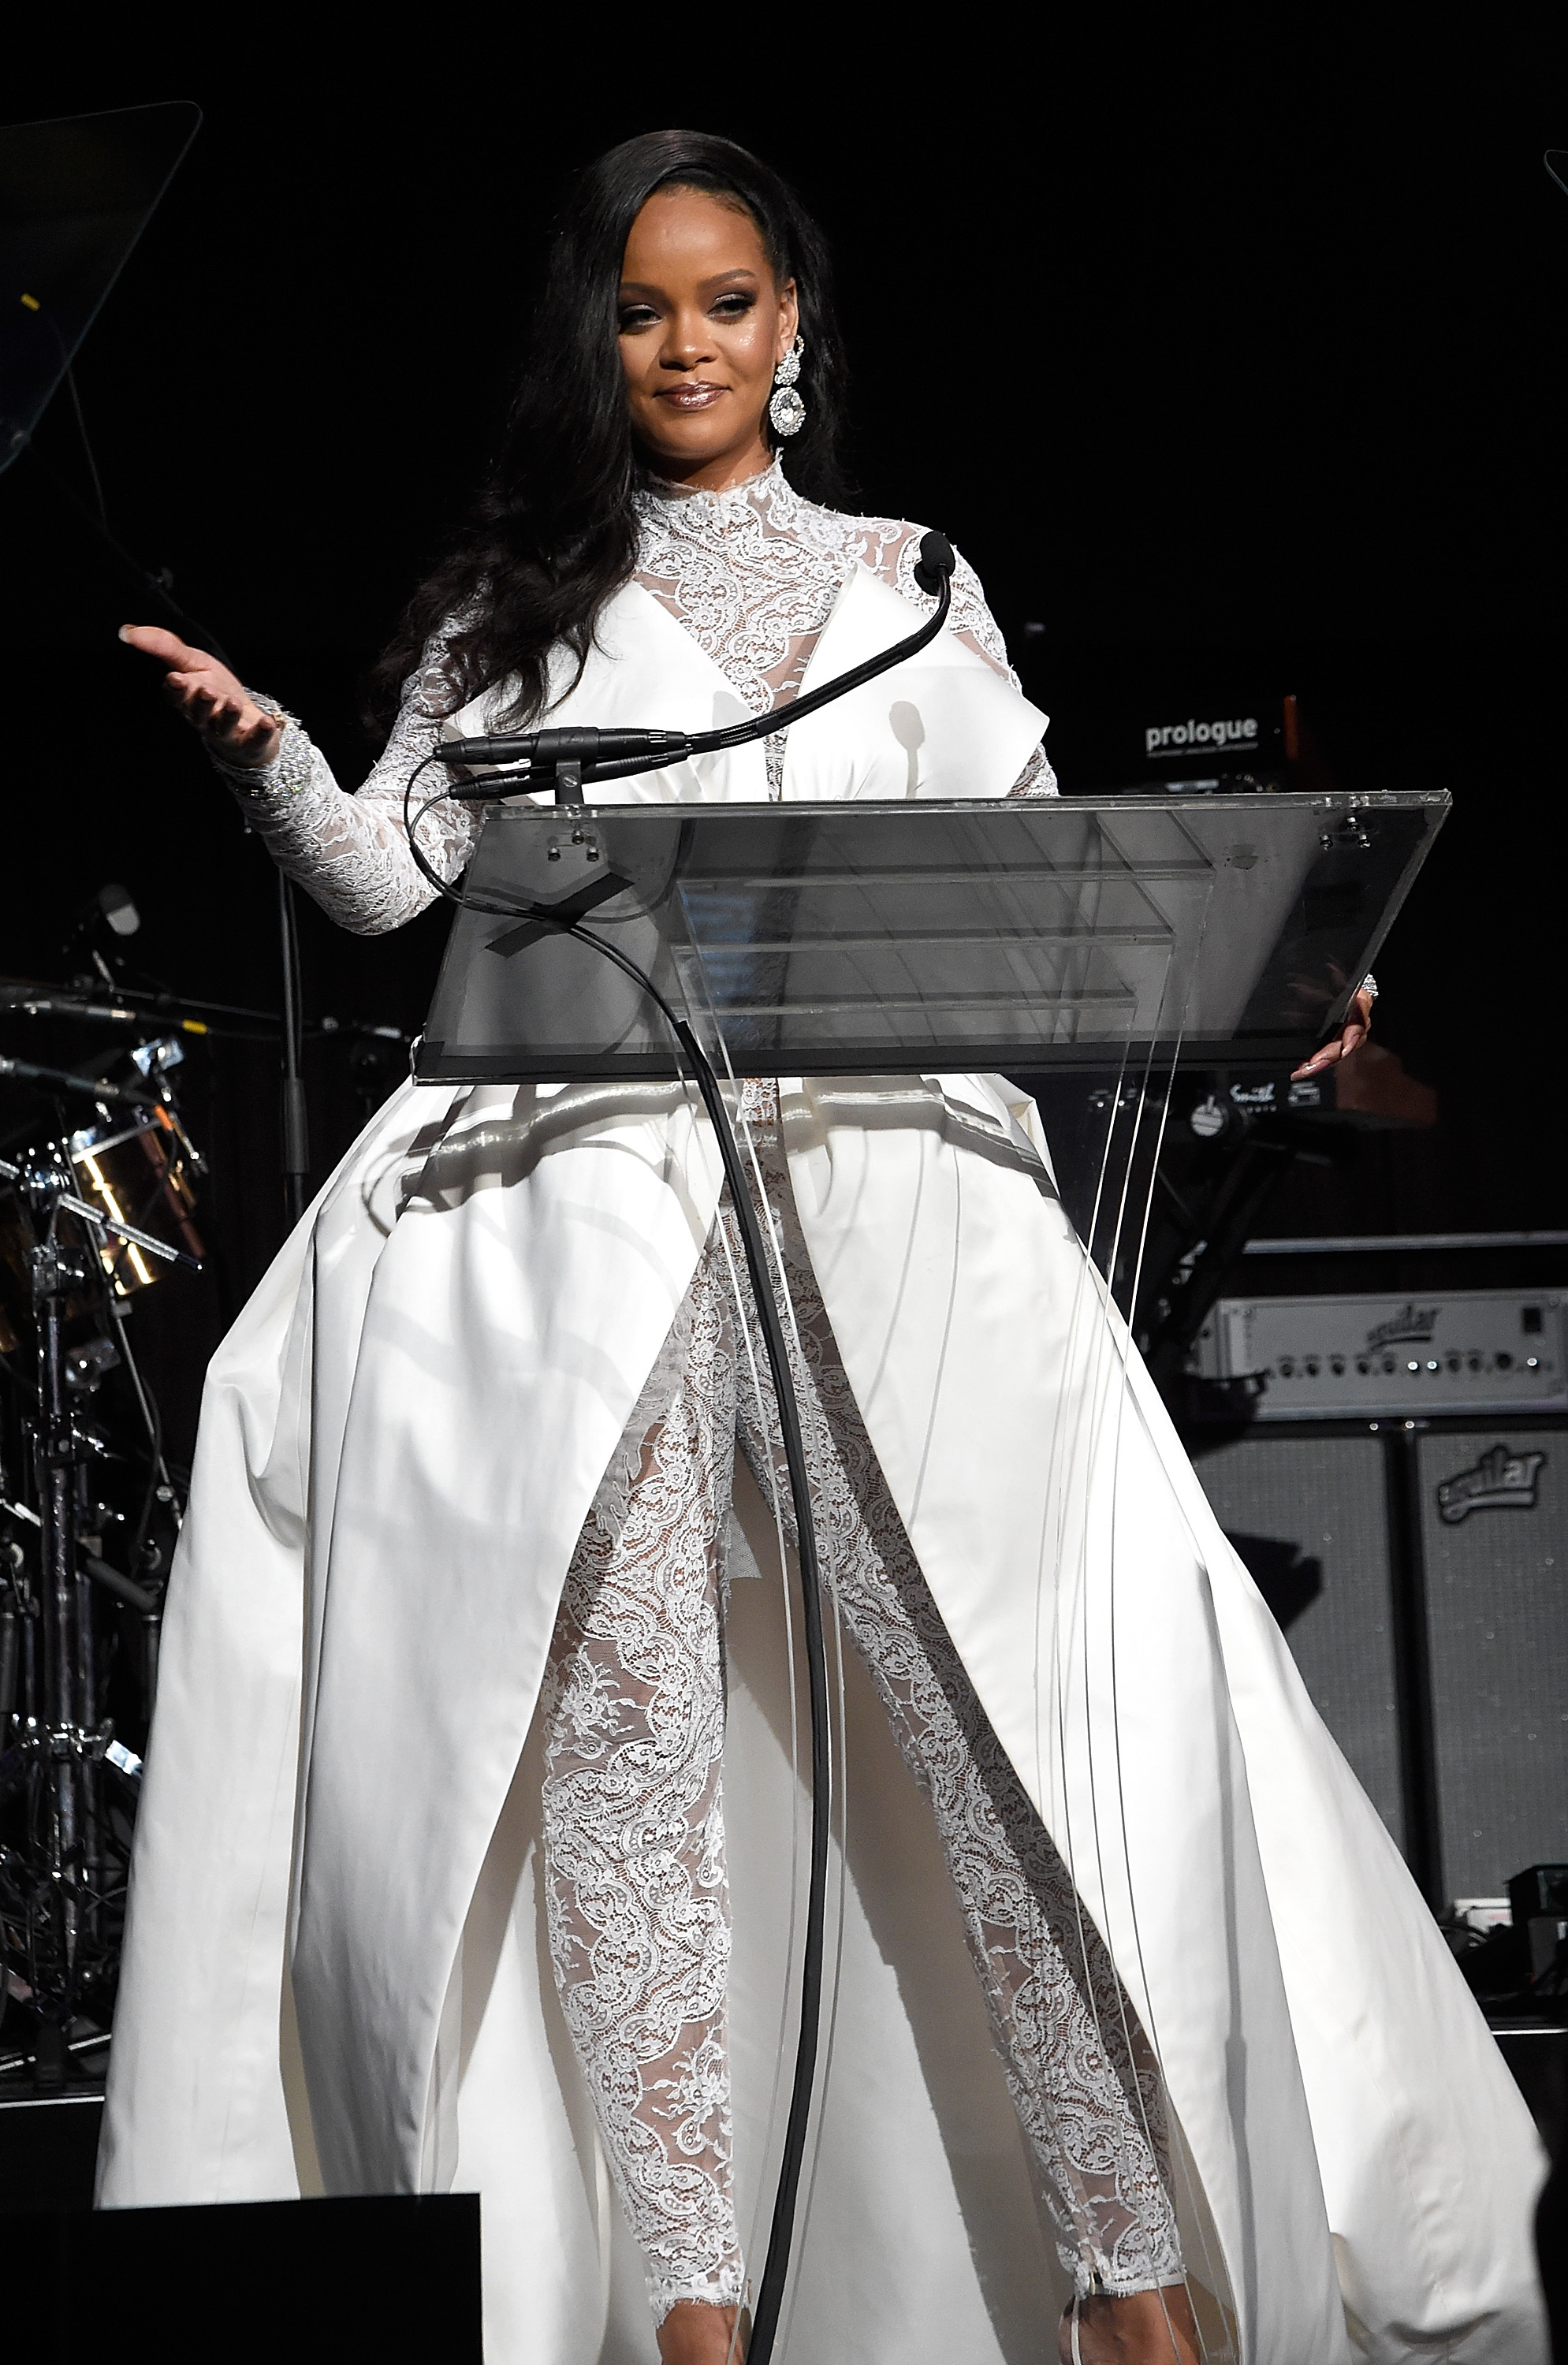 Rihanna's 4th Annual Diamond Ball Benefitting The Clara Lionel Foundation - Inside